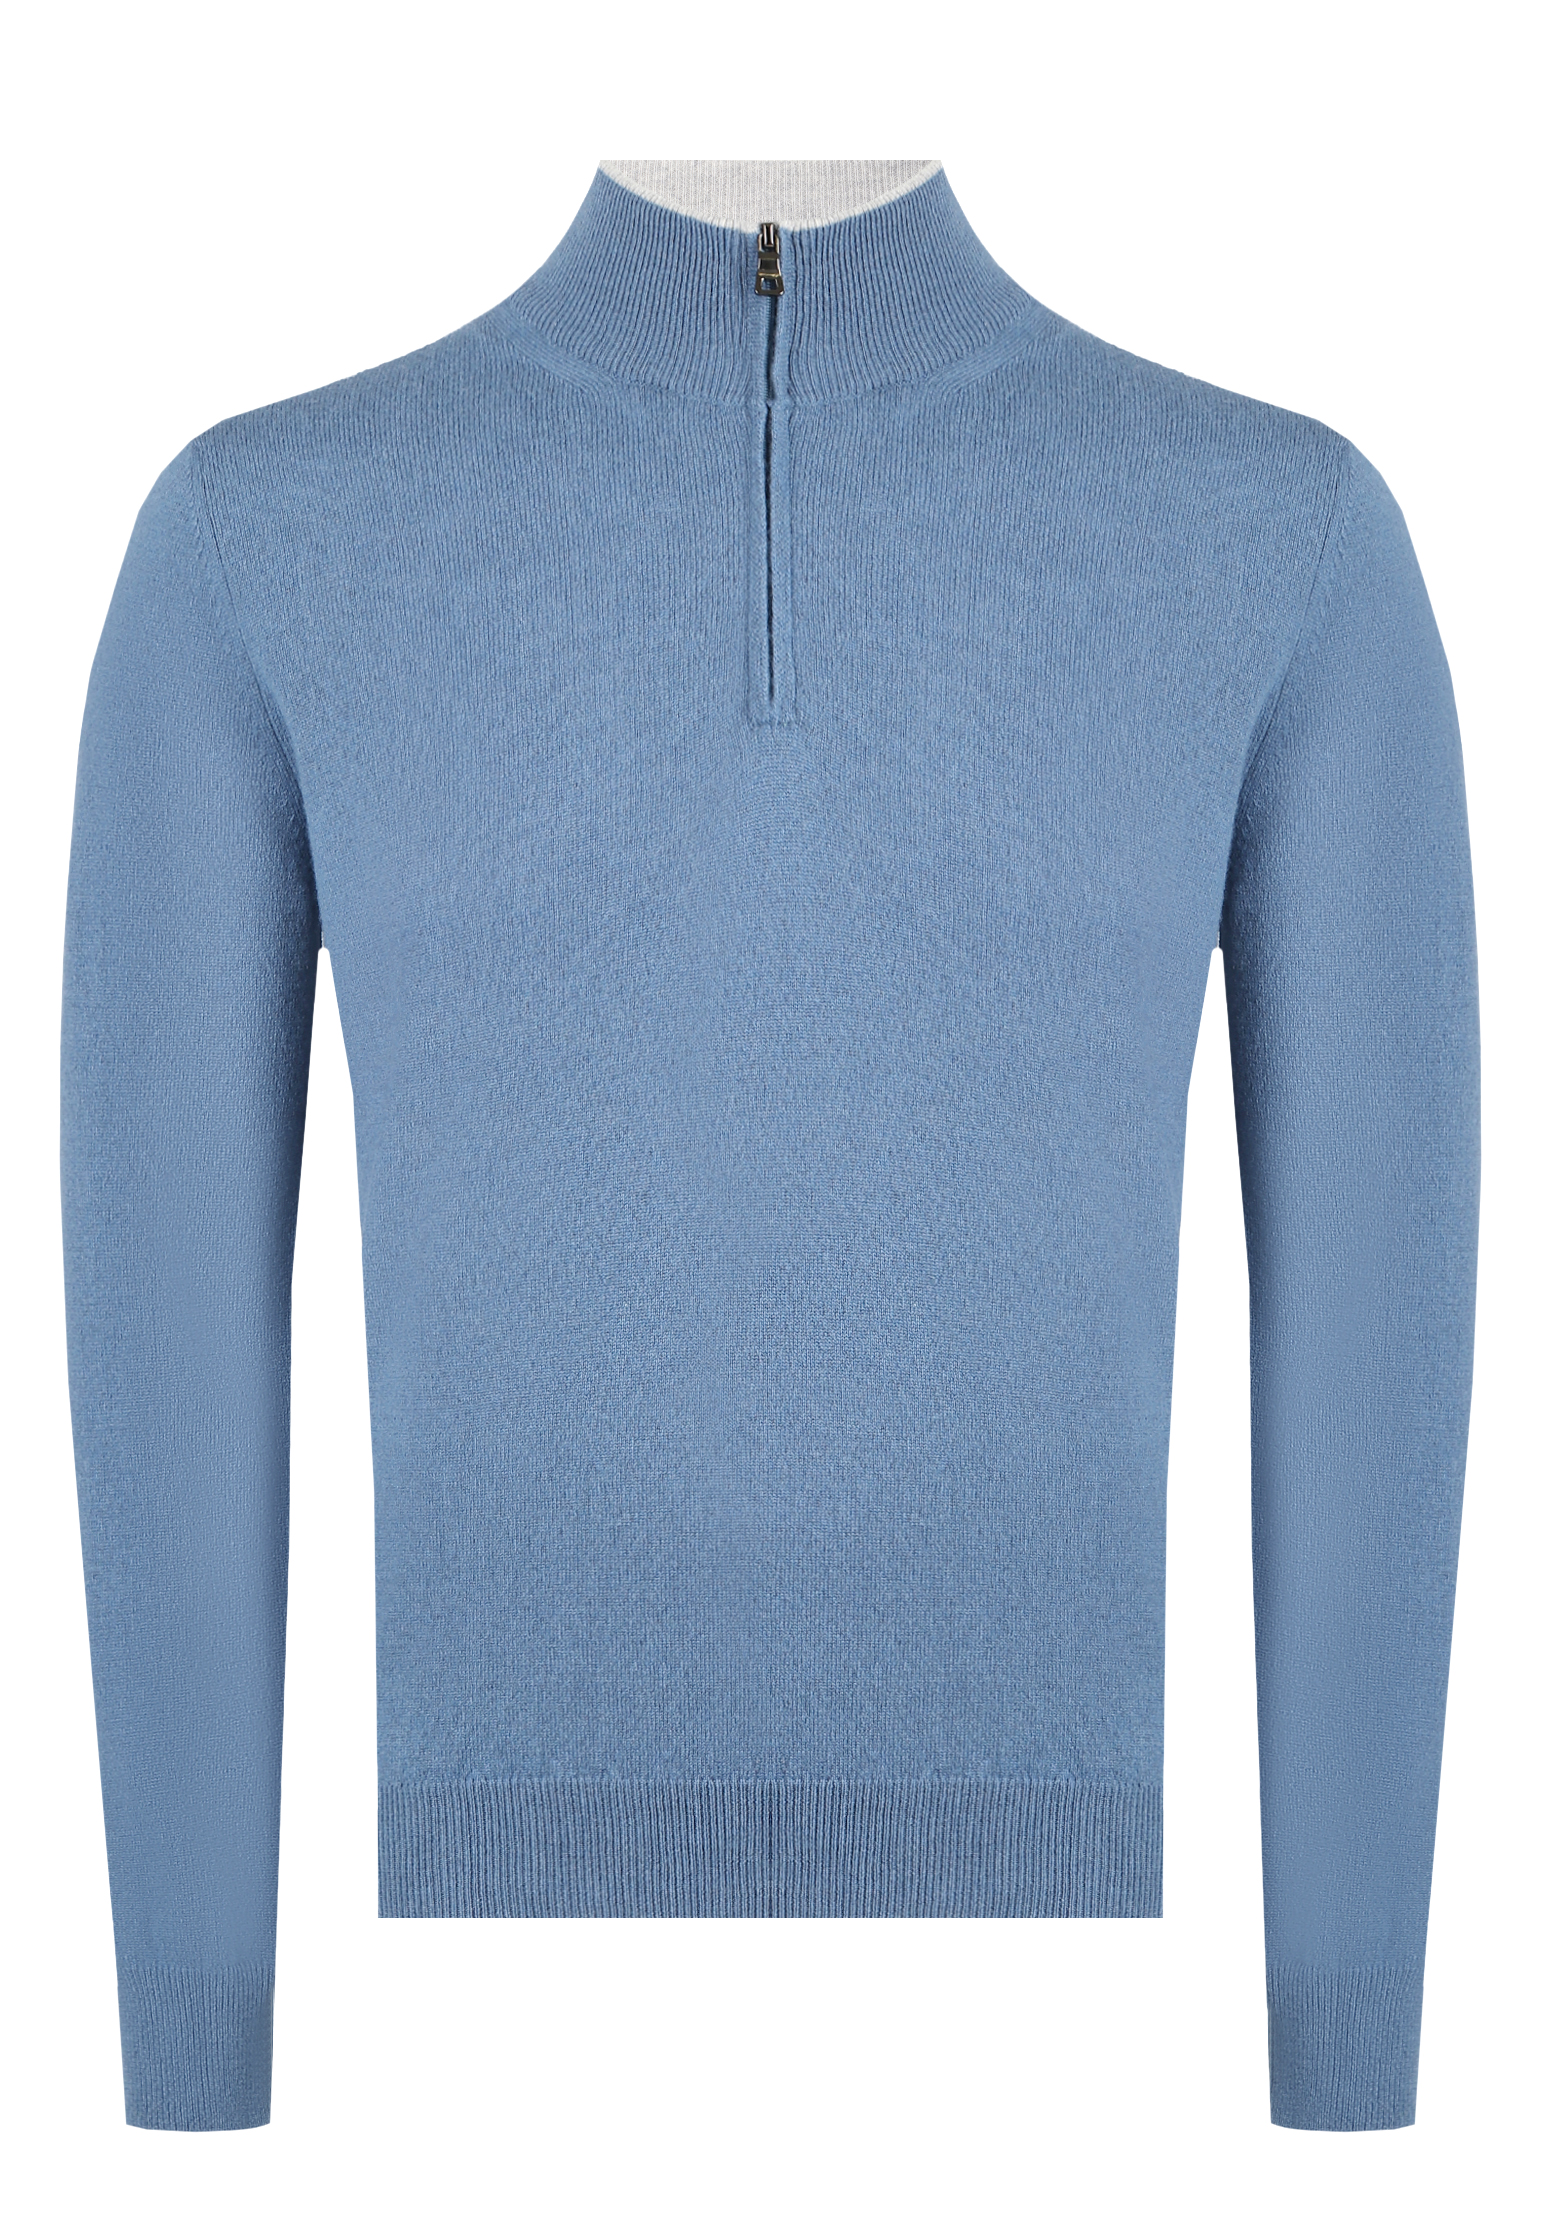 Пуловер FERRANTE Синий, размер 48